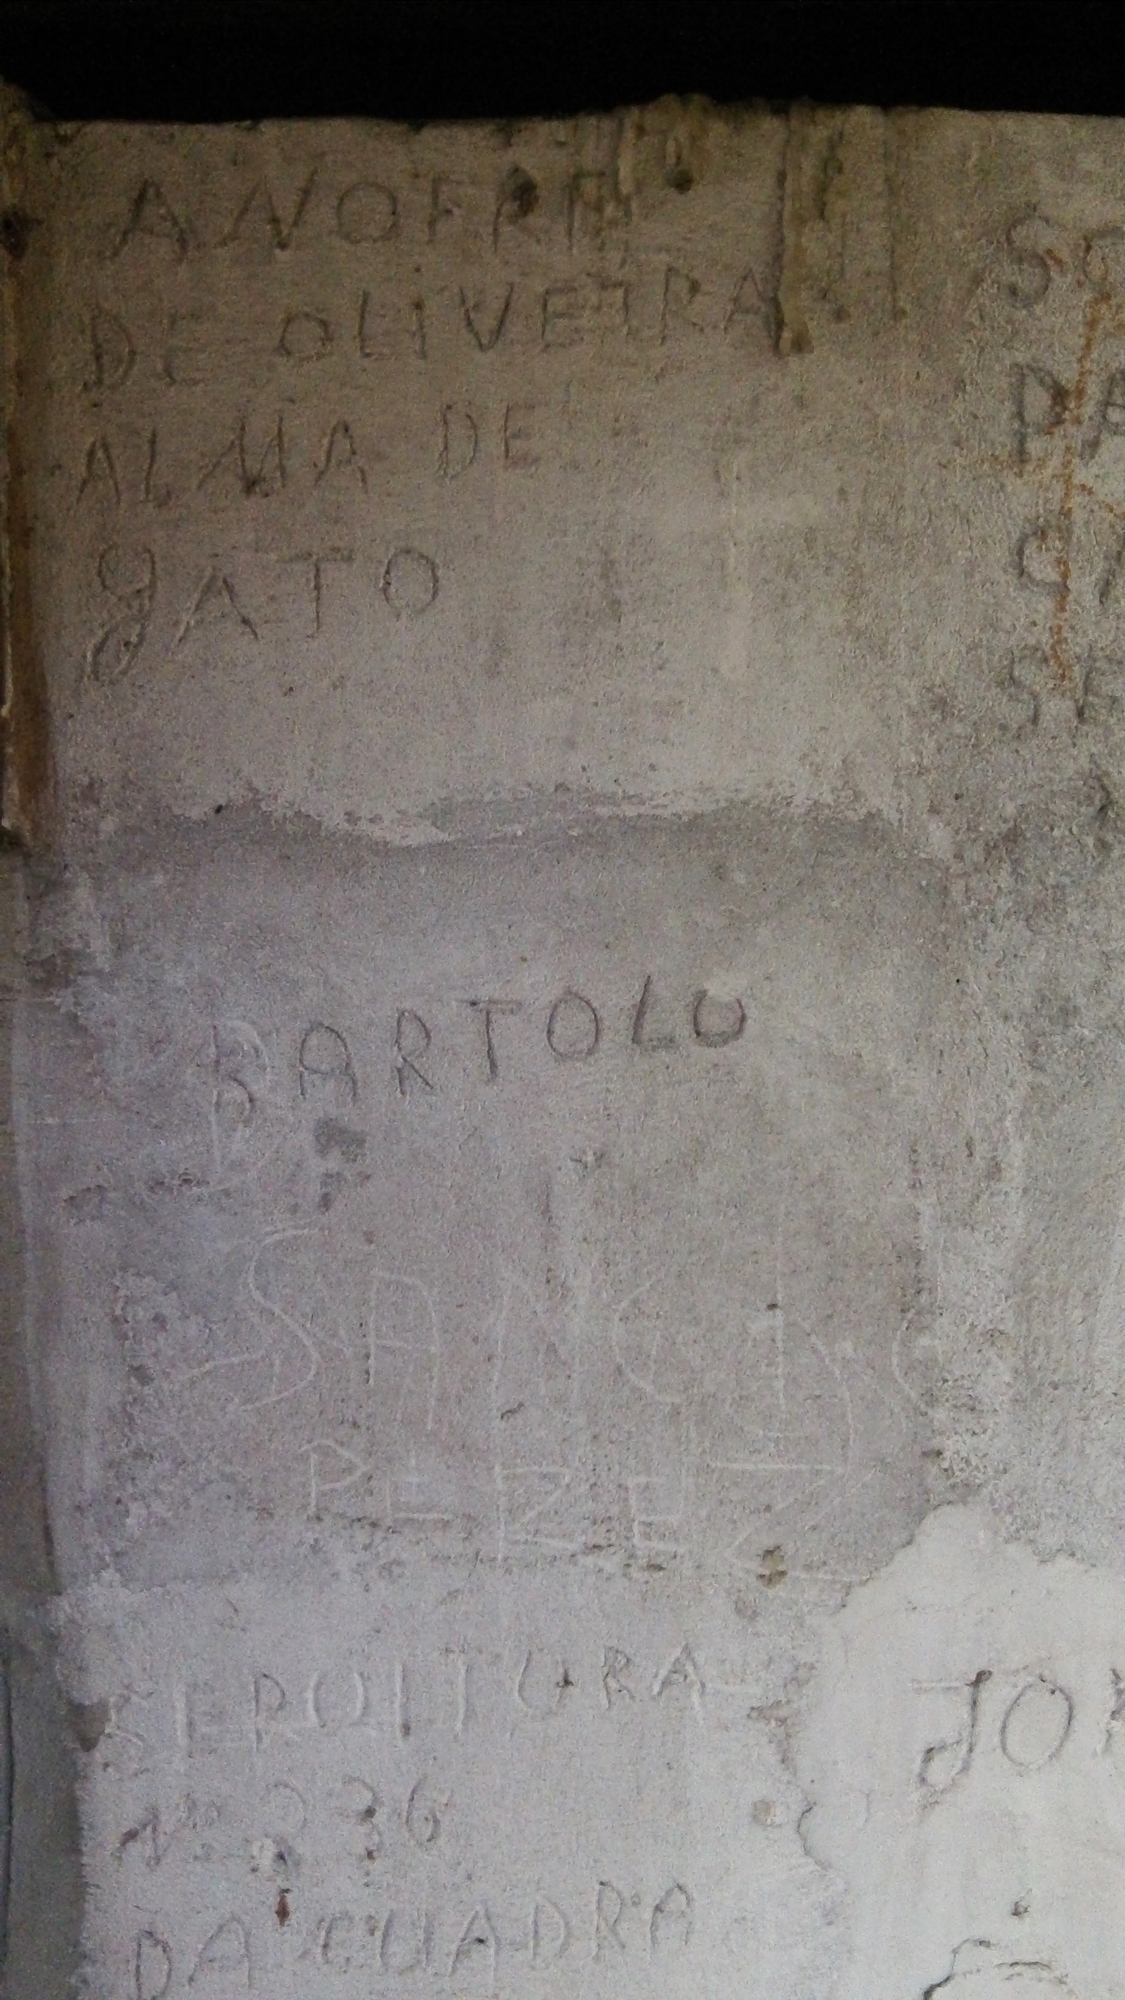 Alma de Gato foi sepultado na gaveta superior e Bartolo na gaveta inferior do Cemitério Municipal de Paranavaí (Foto: David Arioch)